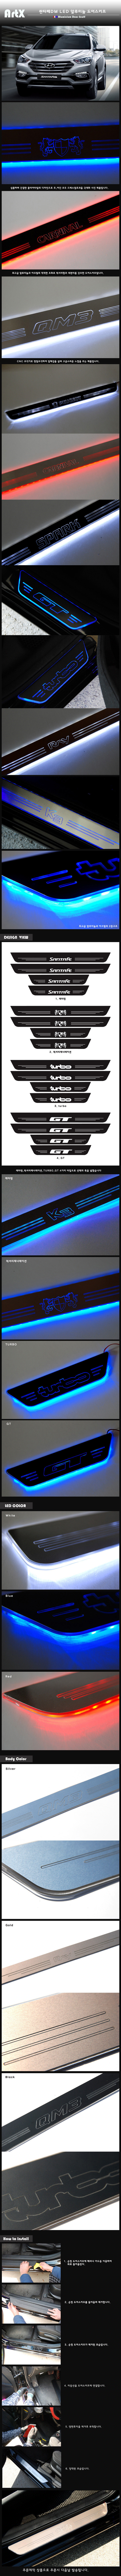 Накладки на пороги алюминиевые с подсветкой (вариант 2) ArtX Hyundai ix55 2007-2014 16058